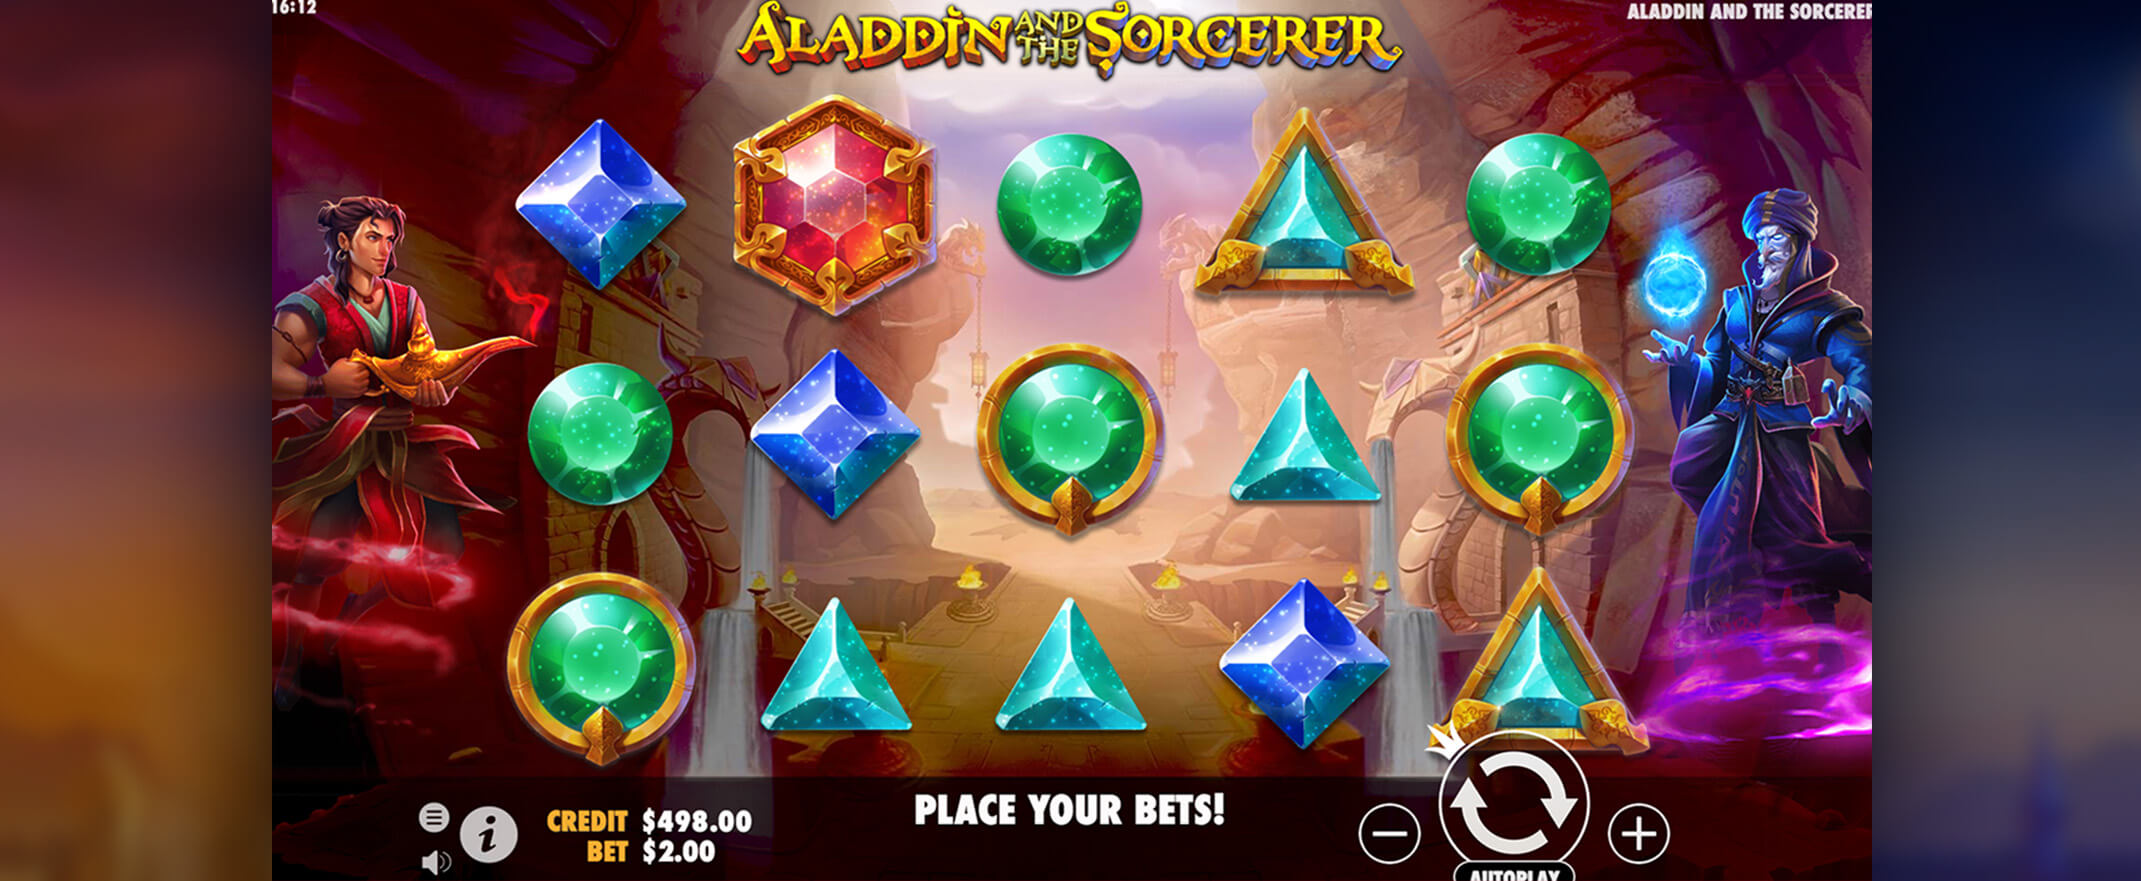 Aladdin and the Sorcerer slot